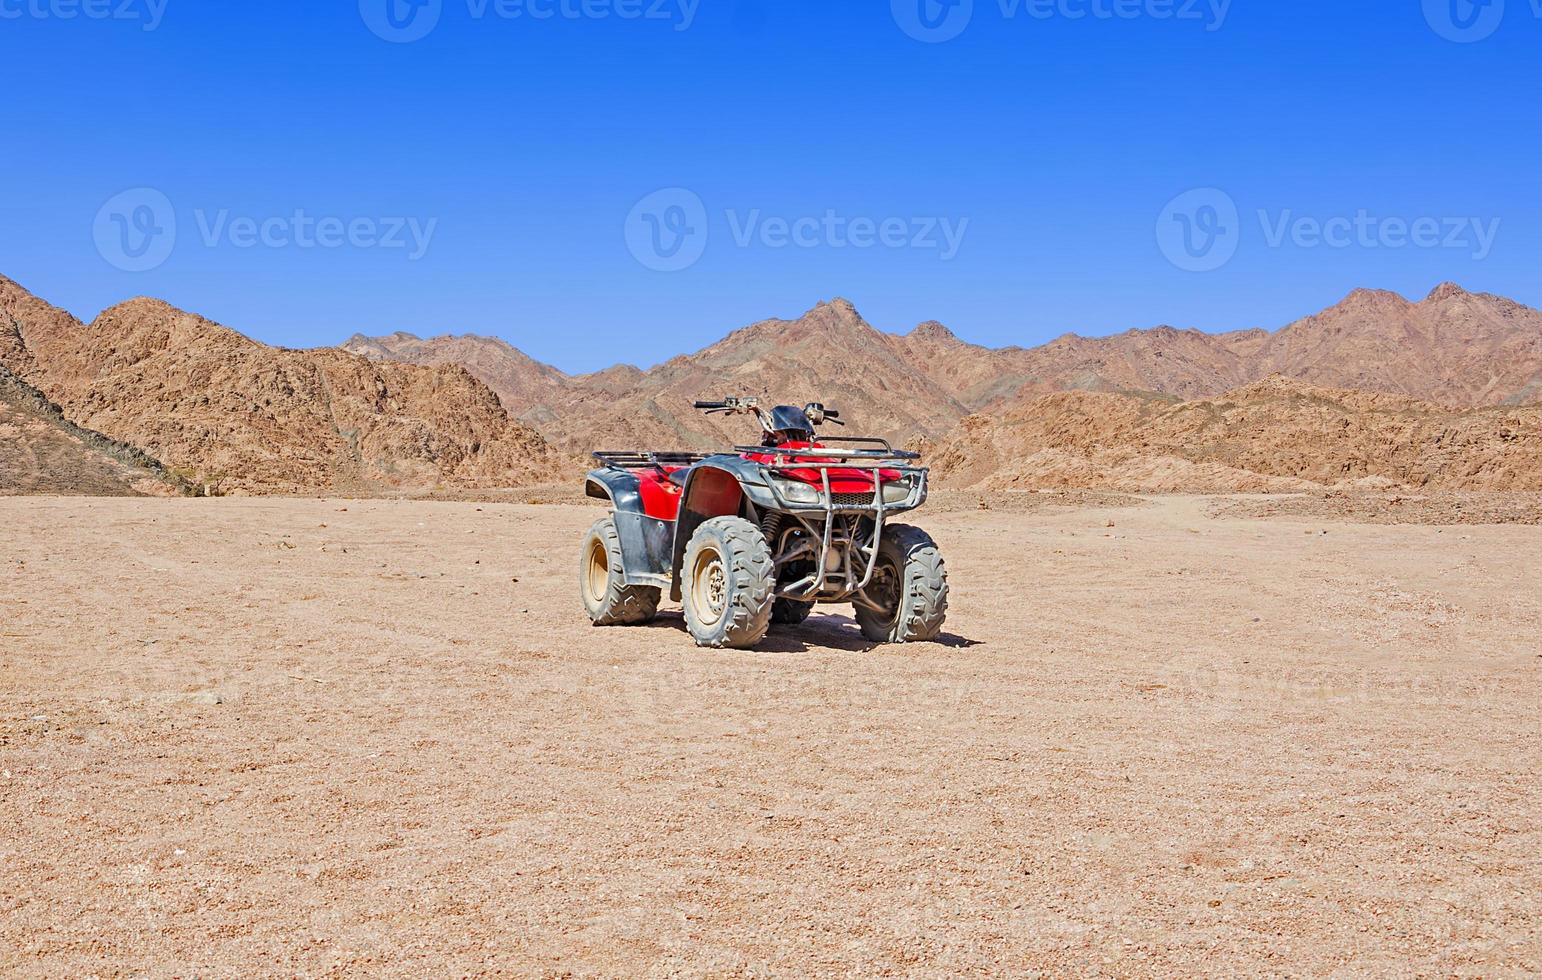 Red quad bike in the desert photo